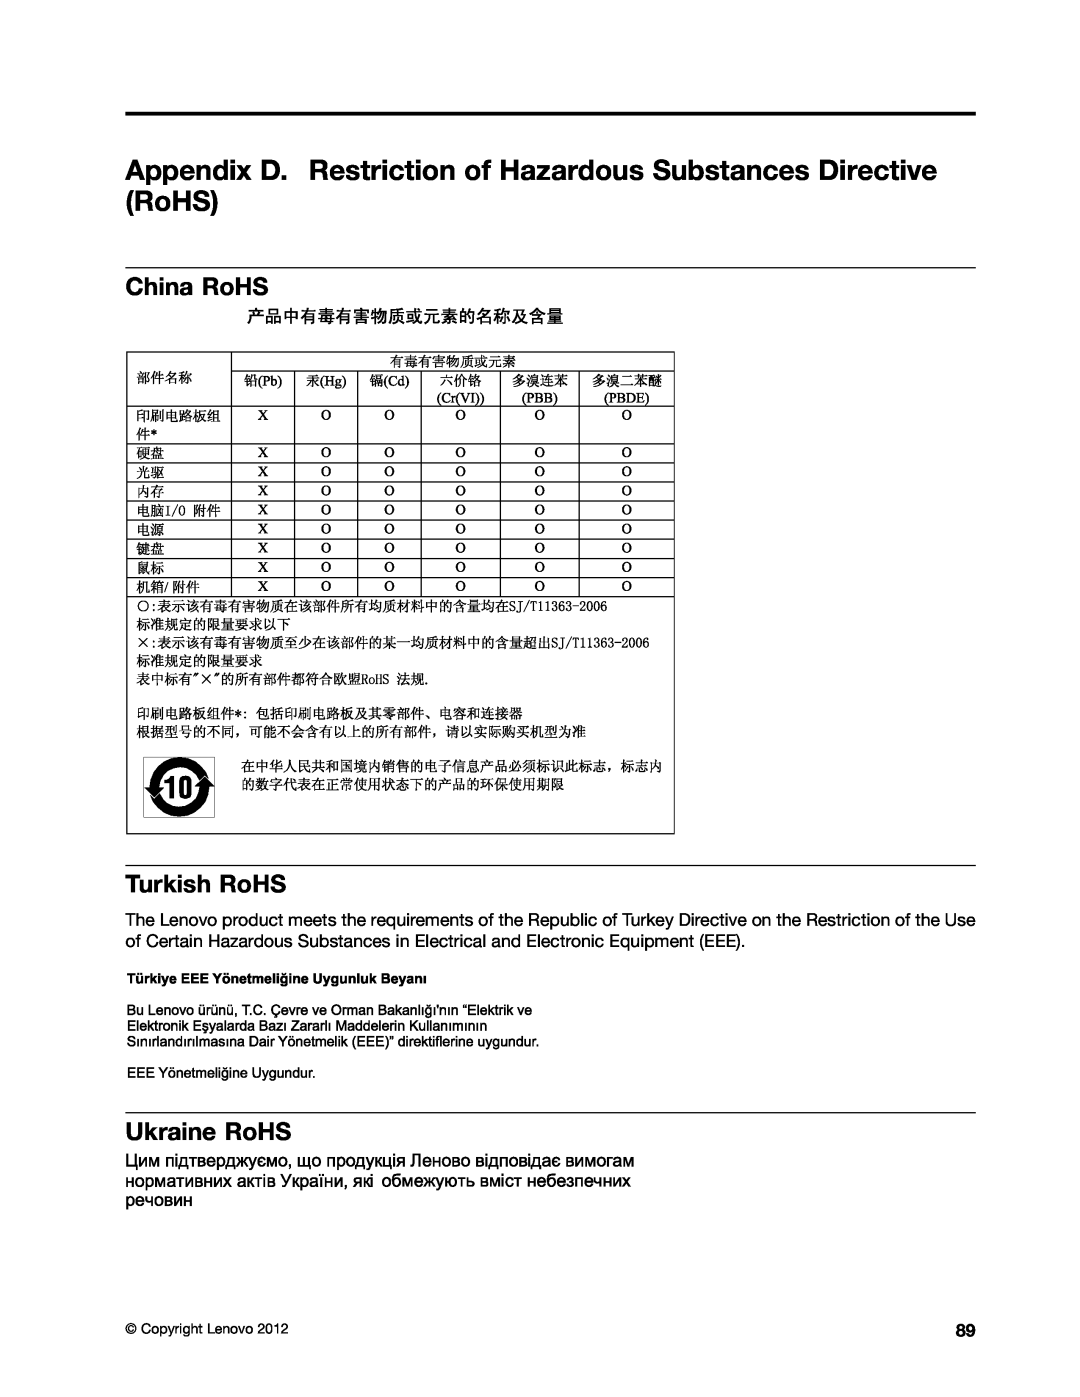 Lenovo 3416, 3398 Appendix D. Restriction of Hazardous Substances Directive RoHS, China RoHS Turkish RoHS, Ukraine RoHS 